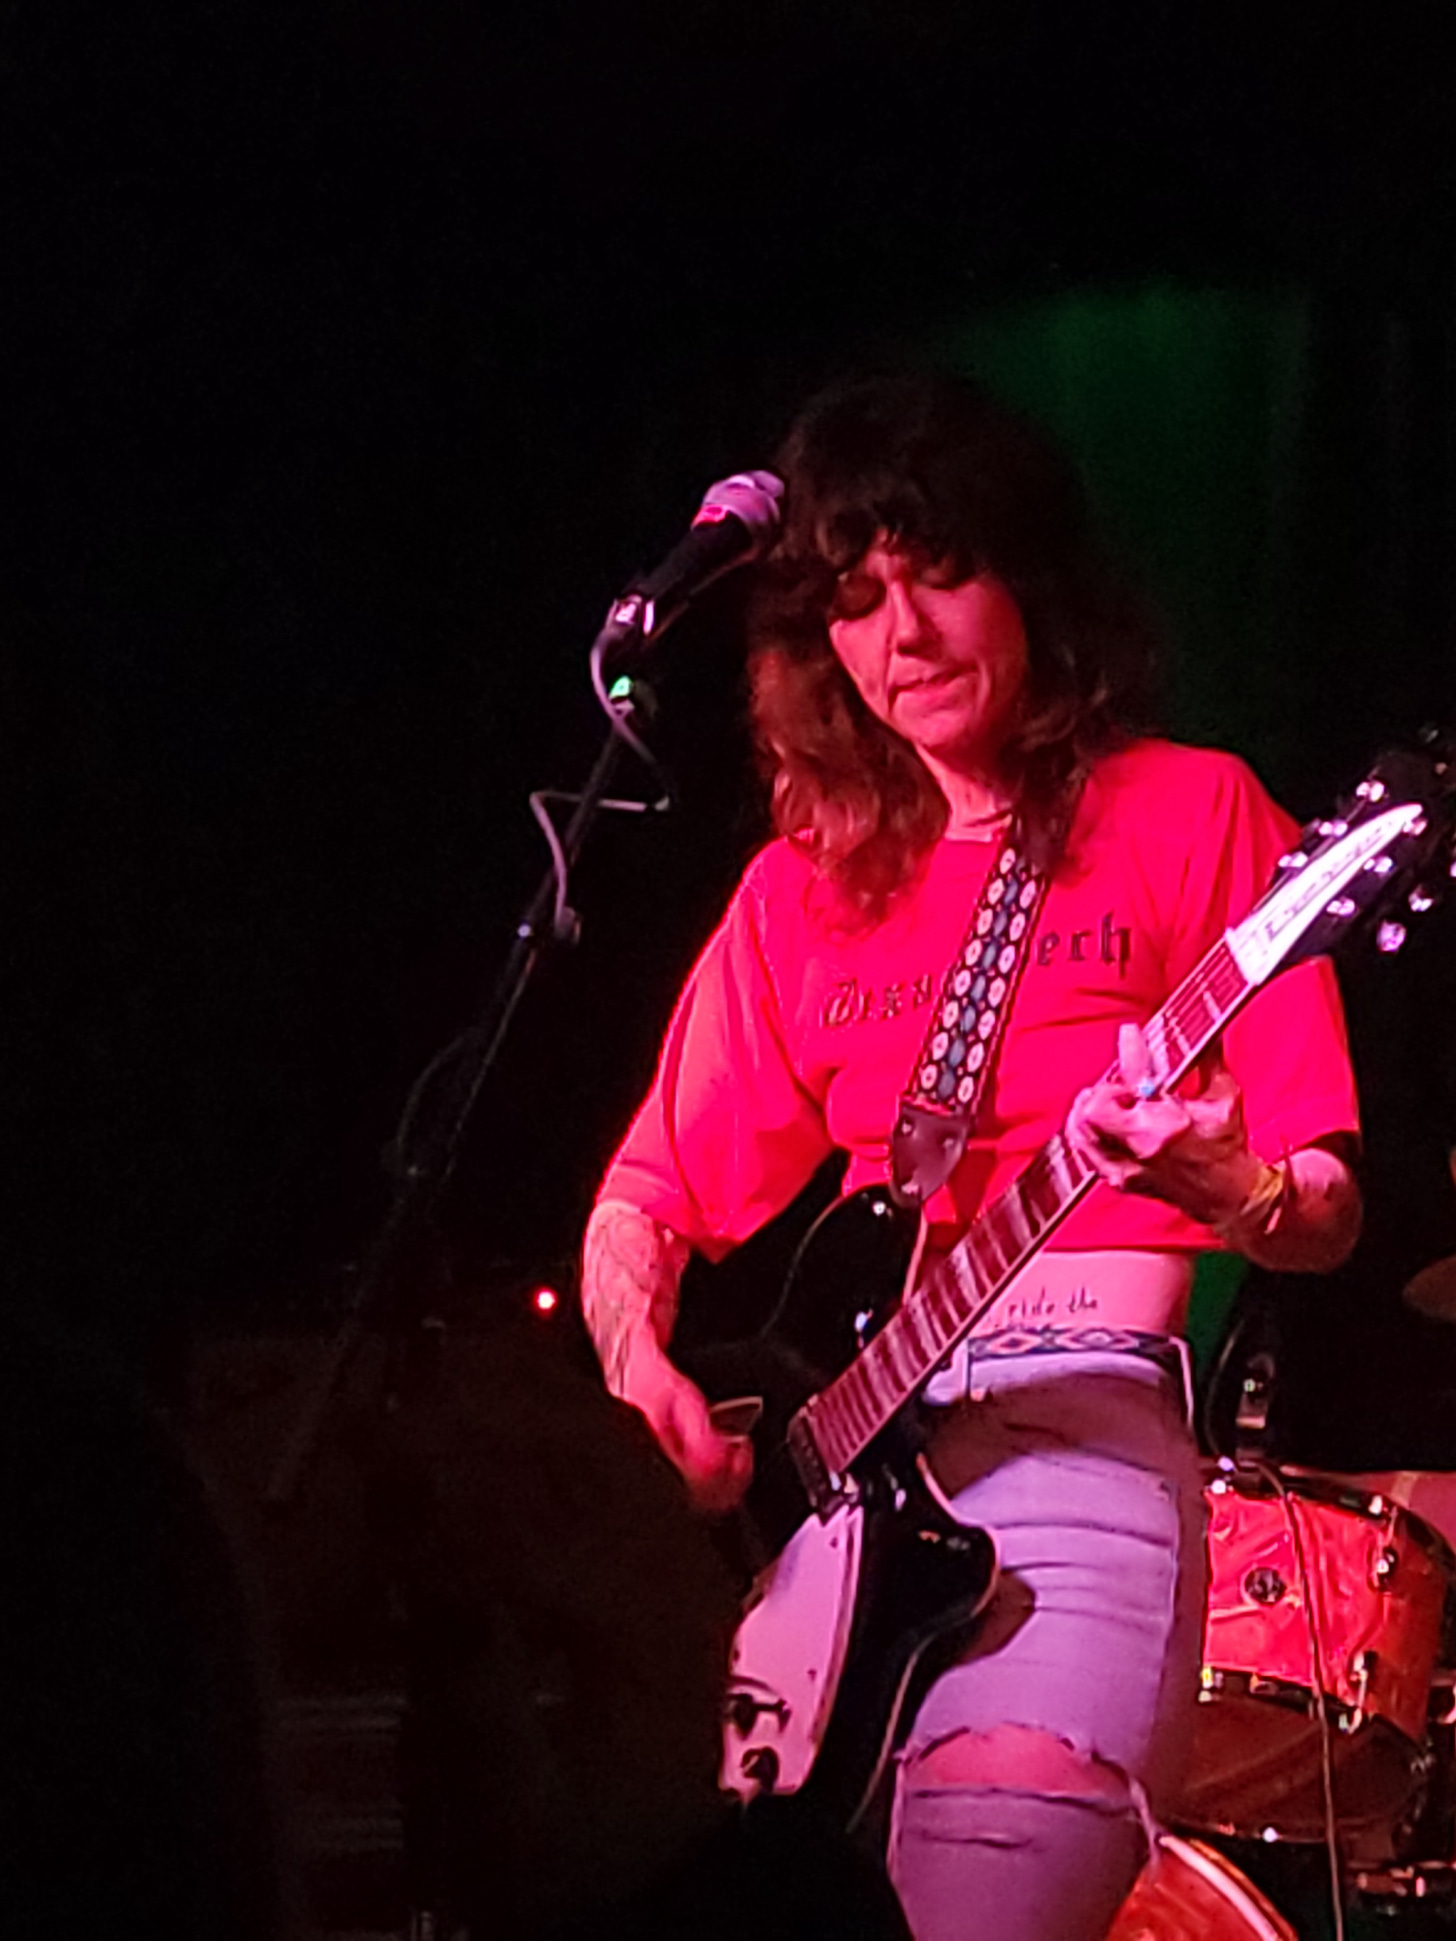 Lilly Hiatt in red shirt, playing guitar